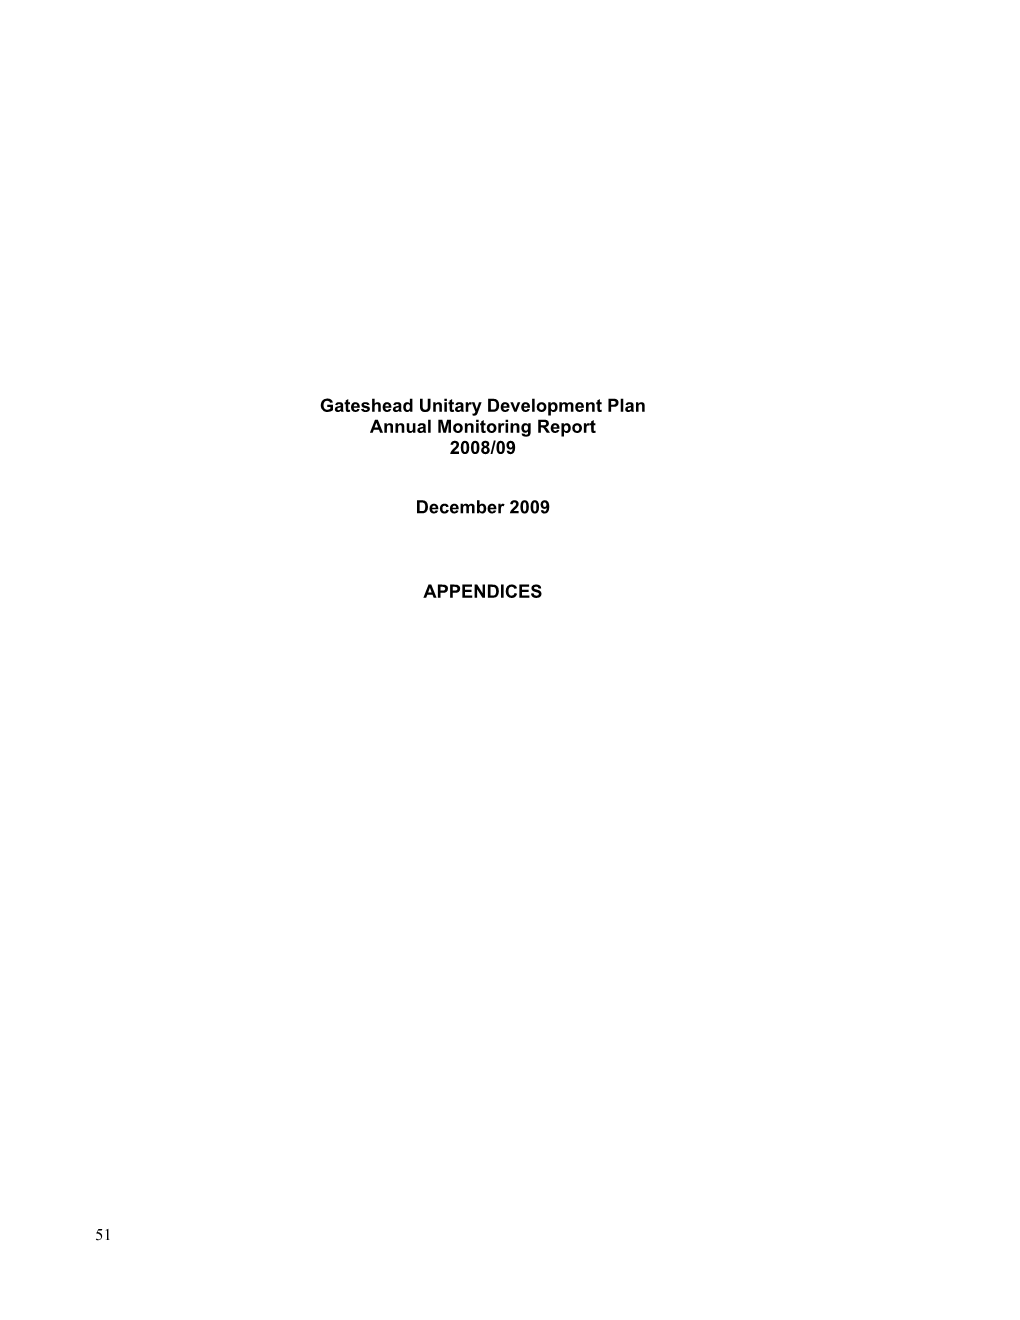 Gateshead Unitary Development Plan Annual Monitoring Report 2008/09